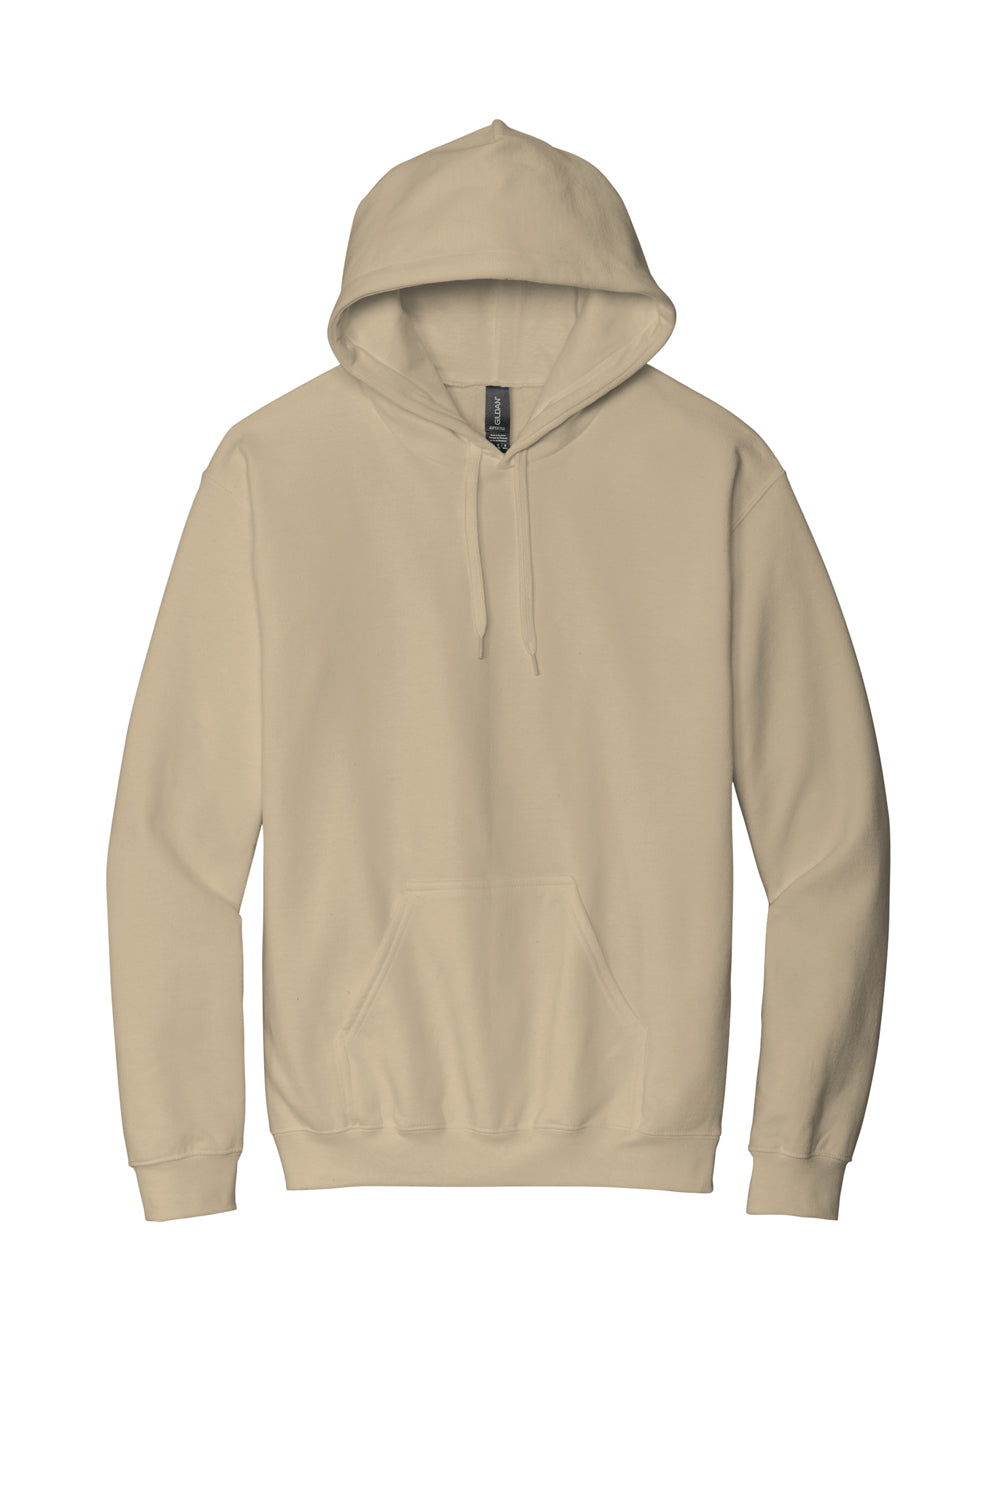 Gildan SF500 Softstyle Hooded Sweatshirt Hoodie Sand Flat Front